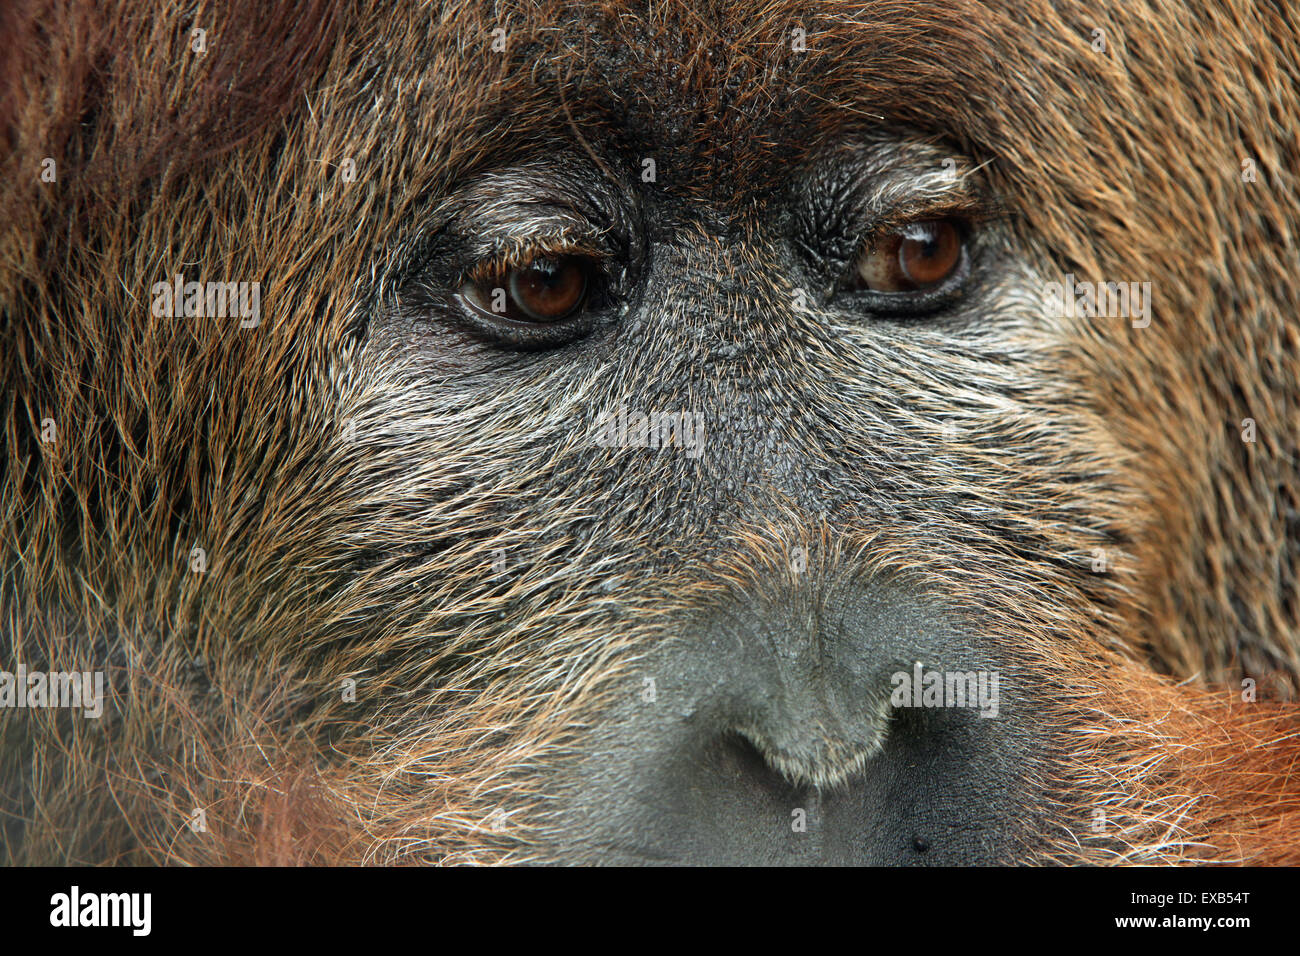 Cross hybrid of the Sumatran orangutan (Pongo abelii) and the Bornean orangutan (Pongo pygmaeus) at Usti nad Labem Zoo. Stock Photo